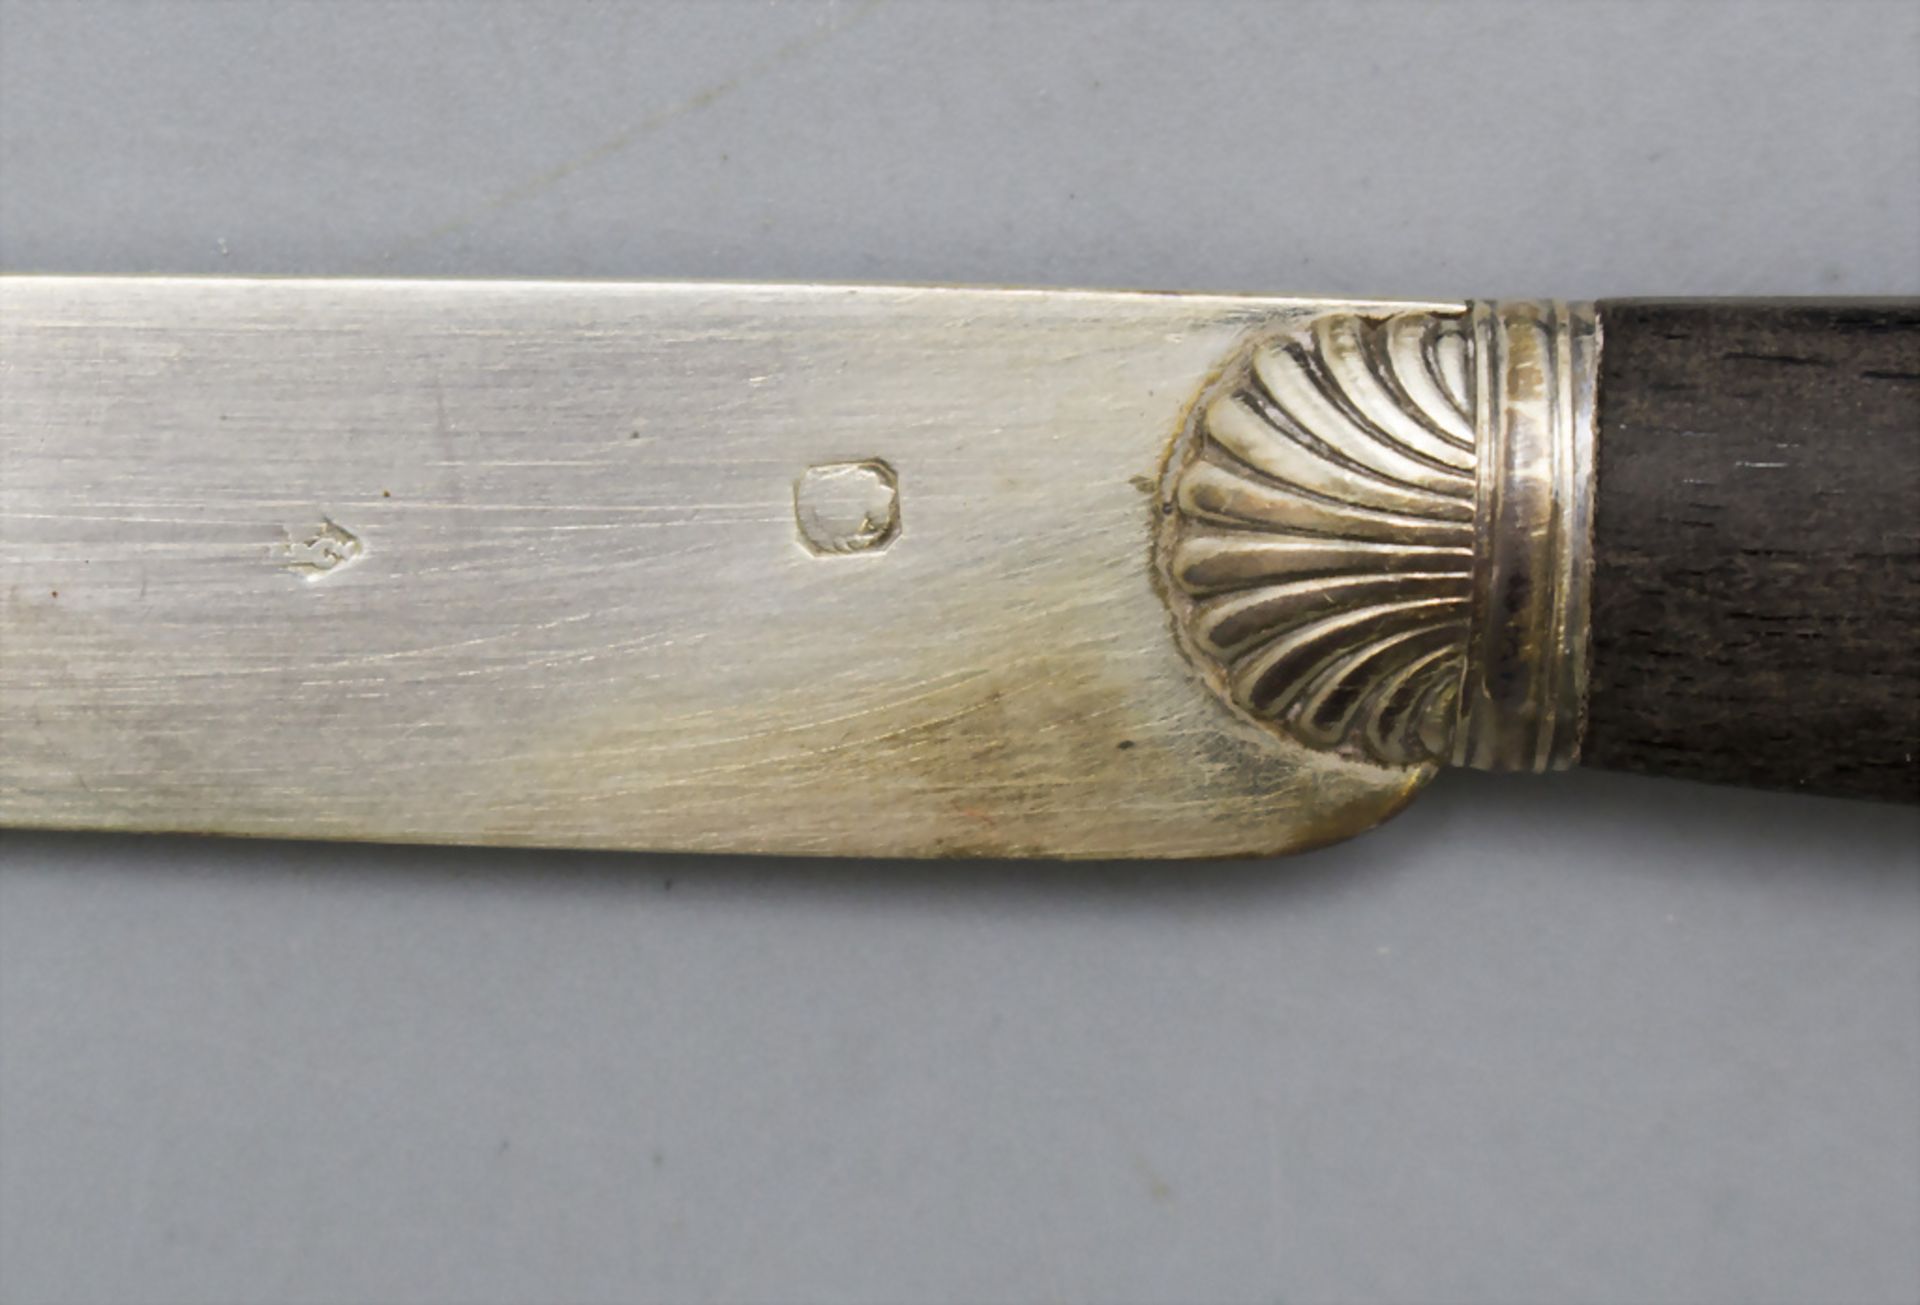 12 Messer mit Silberklingen / 12 knives with silver blades, Gustave Leroy & Cie., Paris, 1896/1897 - Image 4 of 5